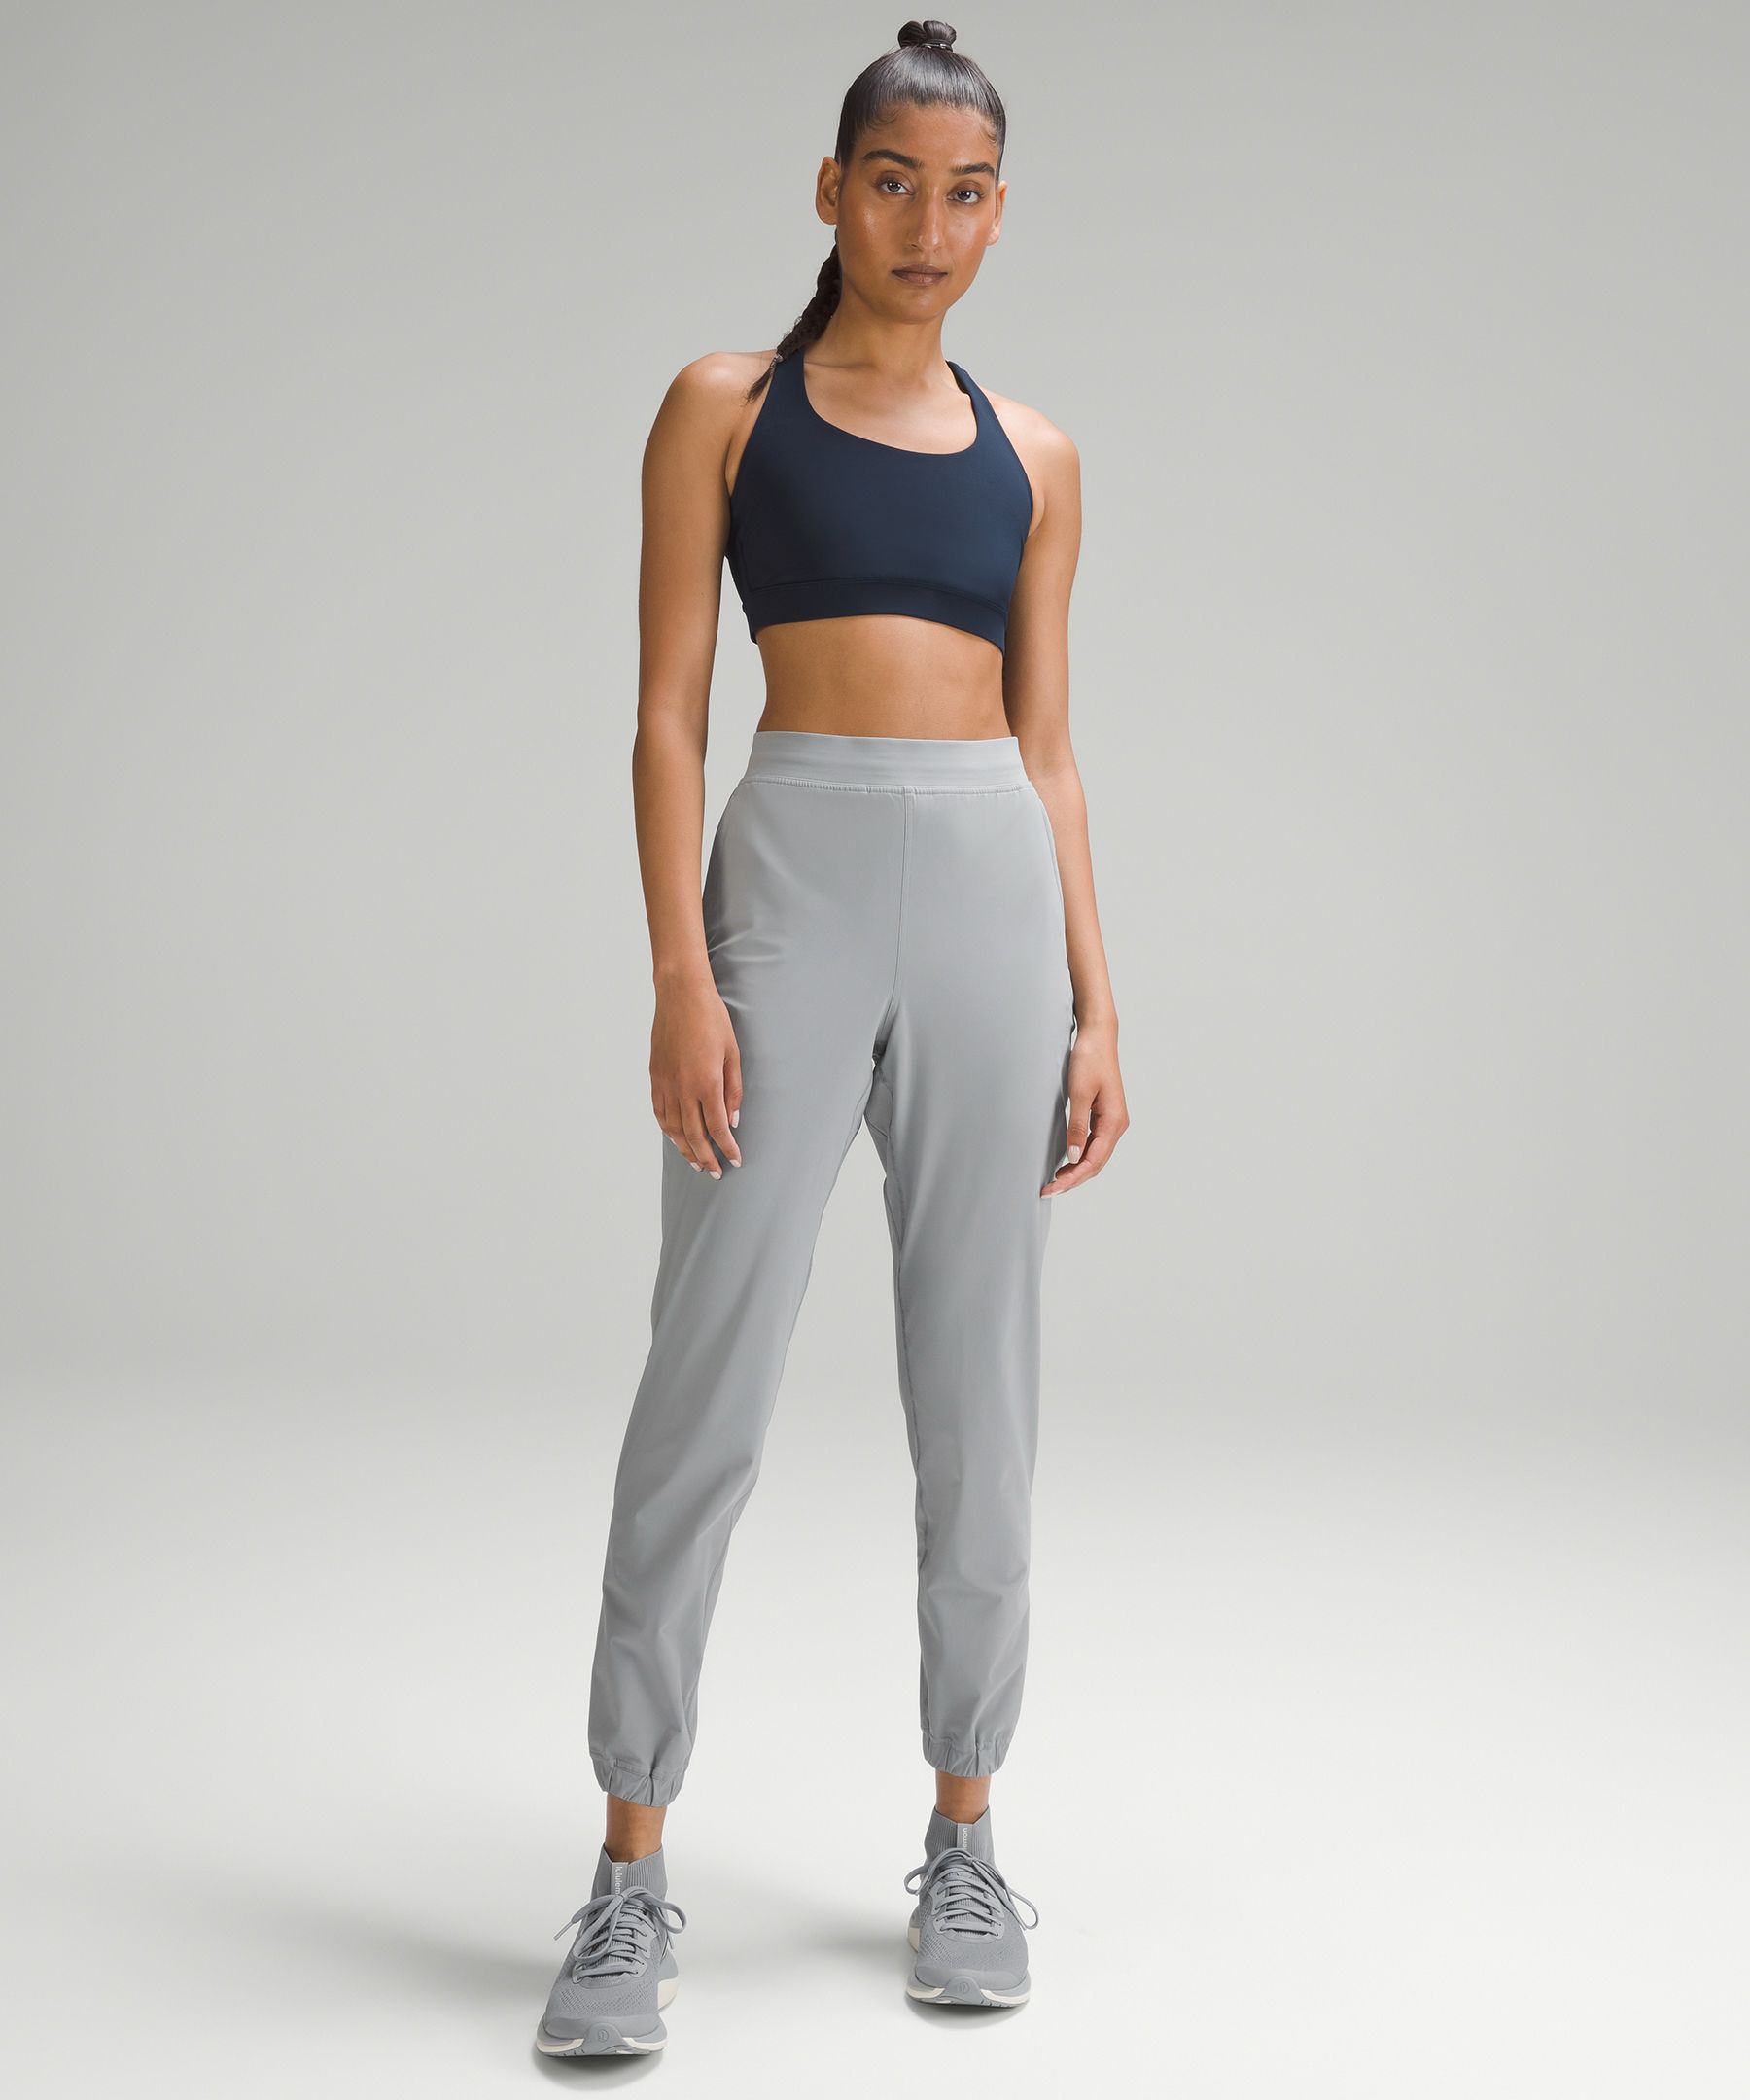 Lululemon Adapted State High Rise Jogger- Full Length (Size 12), Women's -  Bottoms, City of Toronto